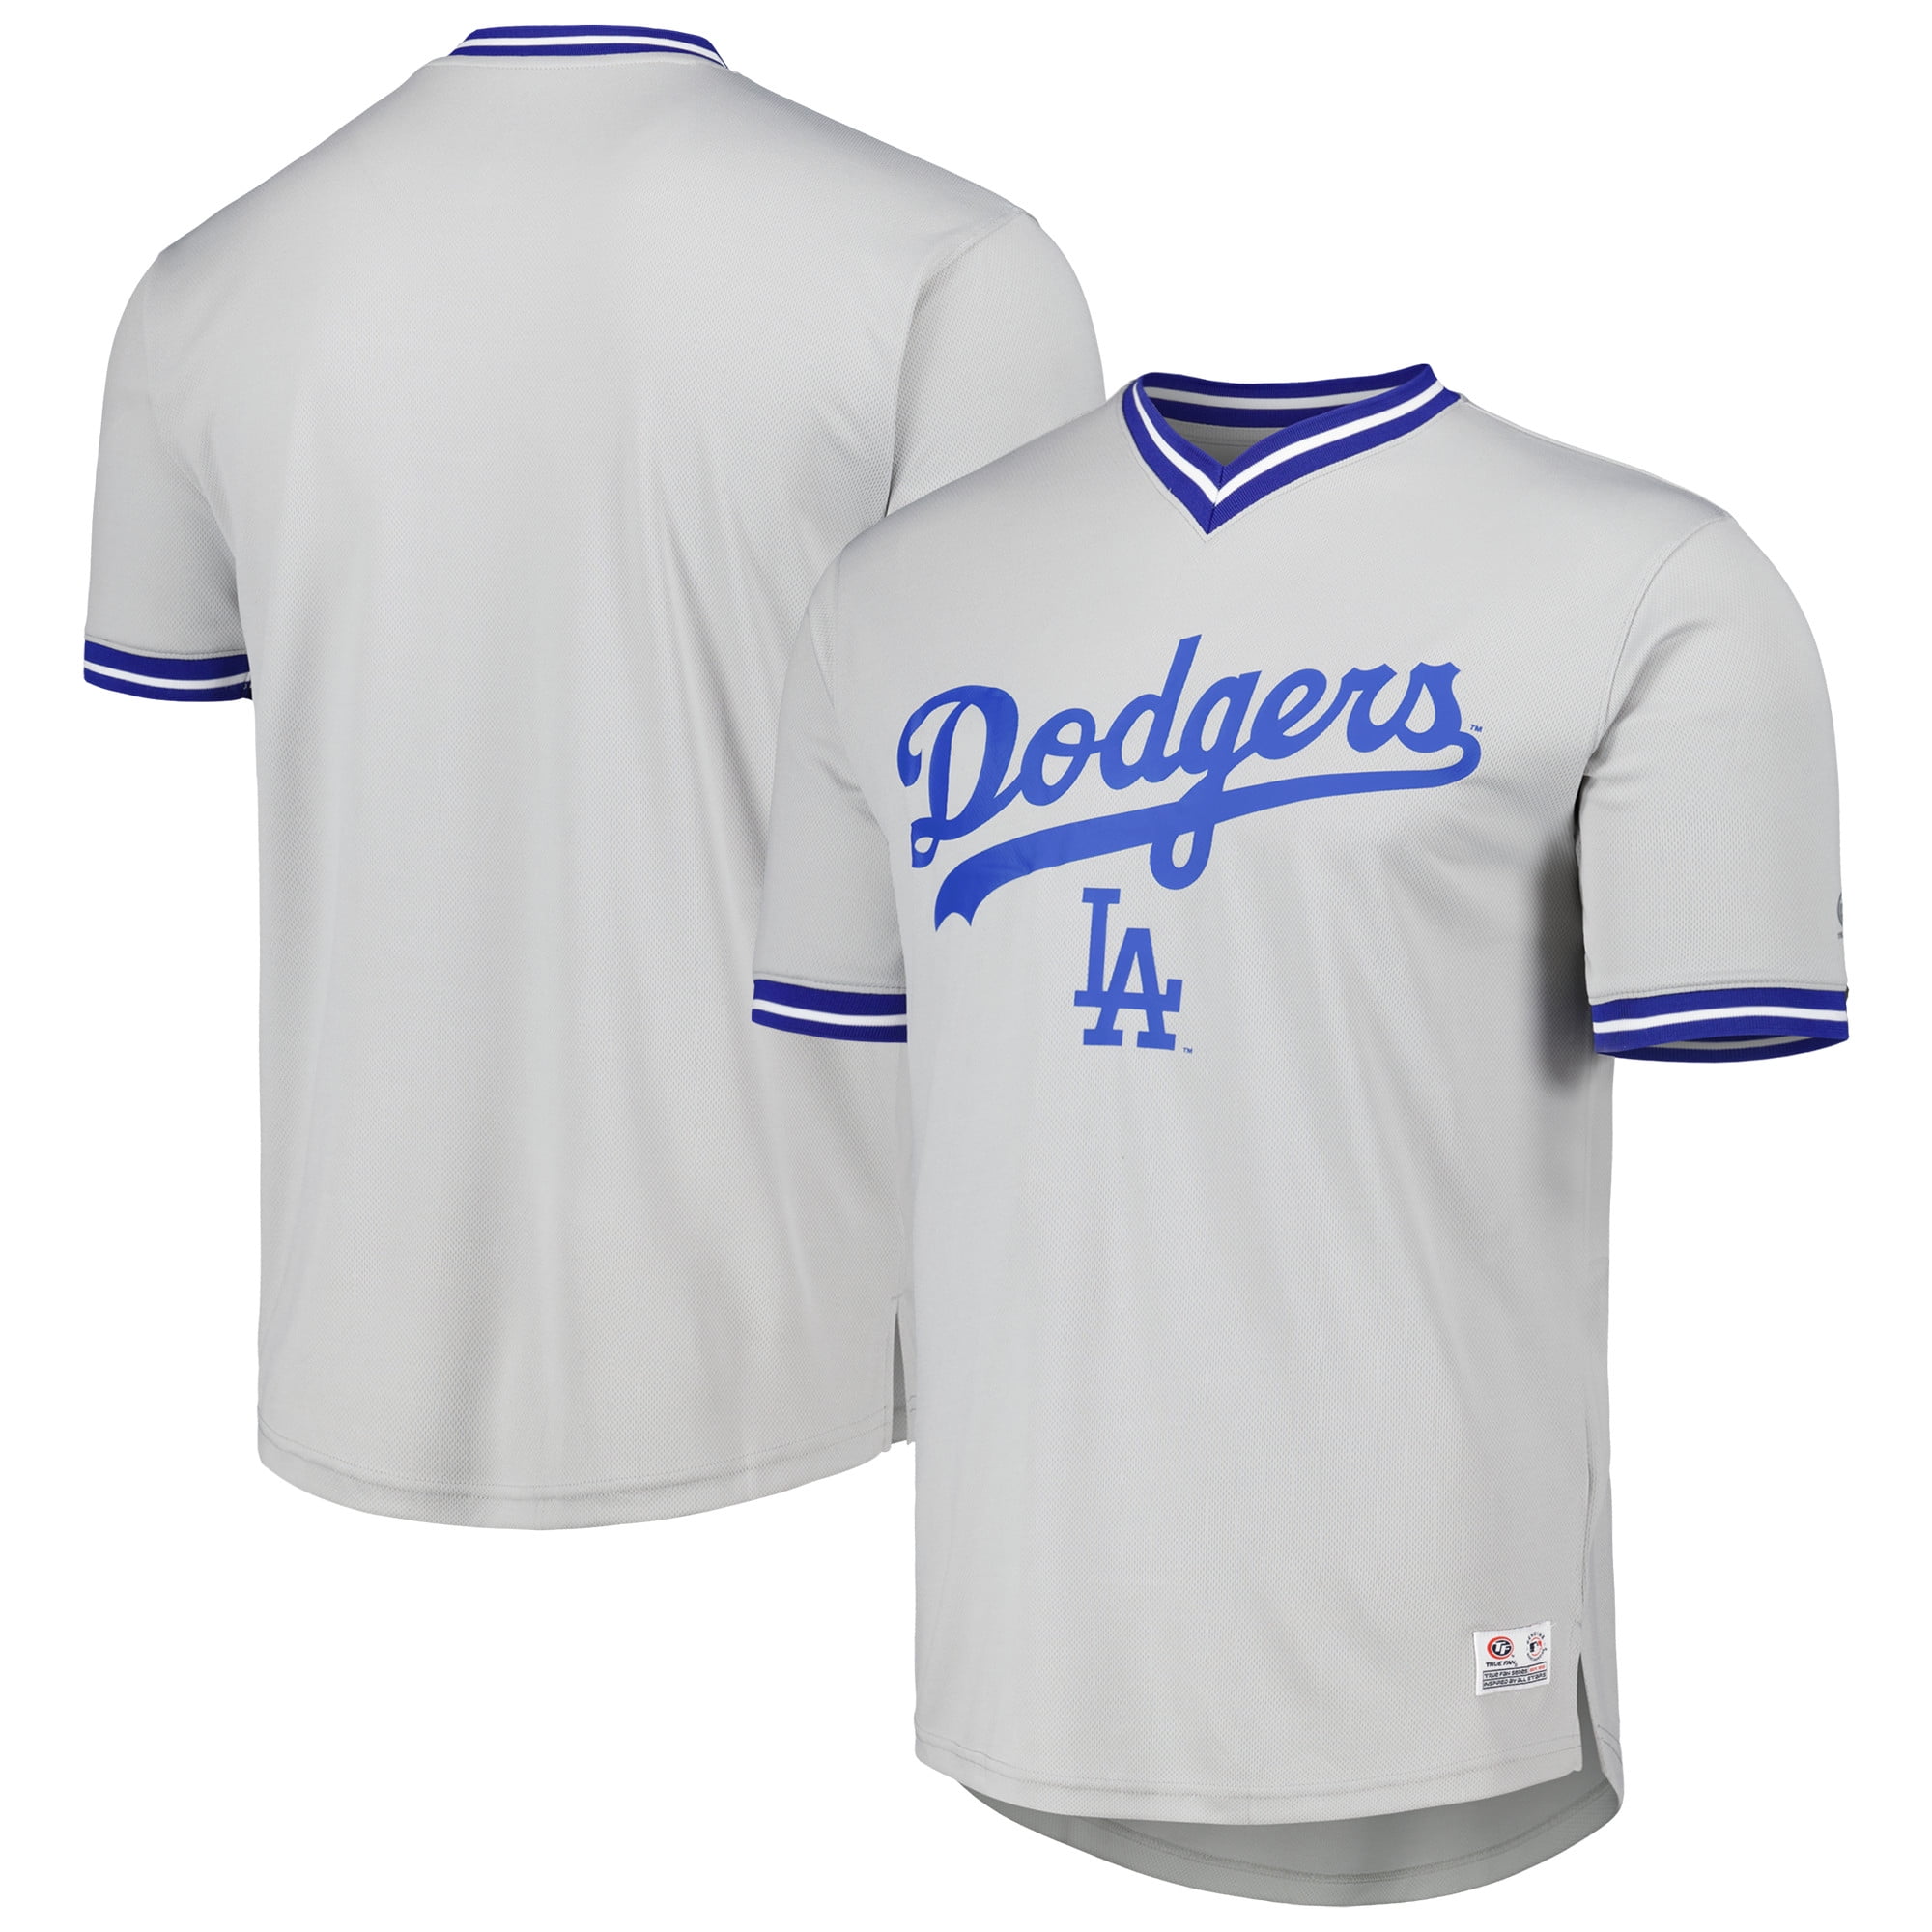 Off-White 'LA Dodgers' printed T-shirt, Men's Clothing